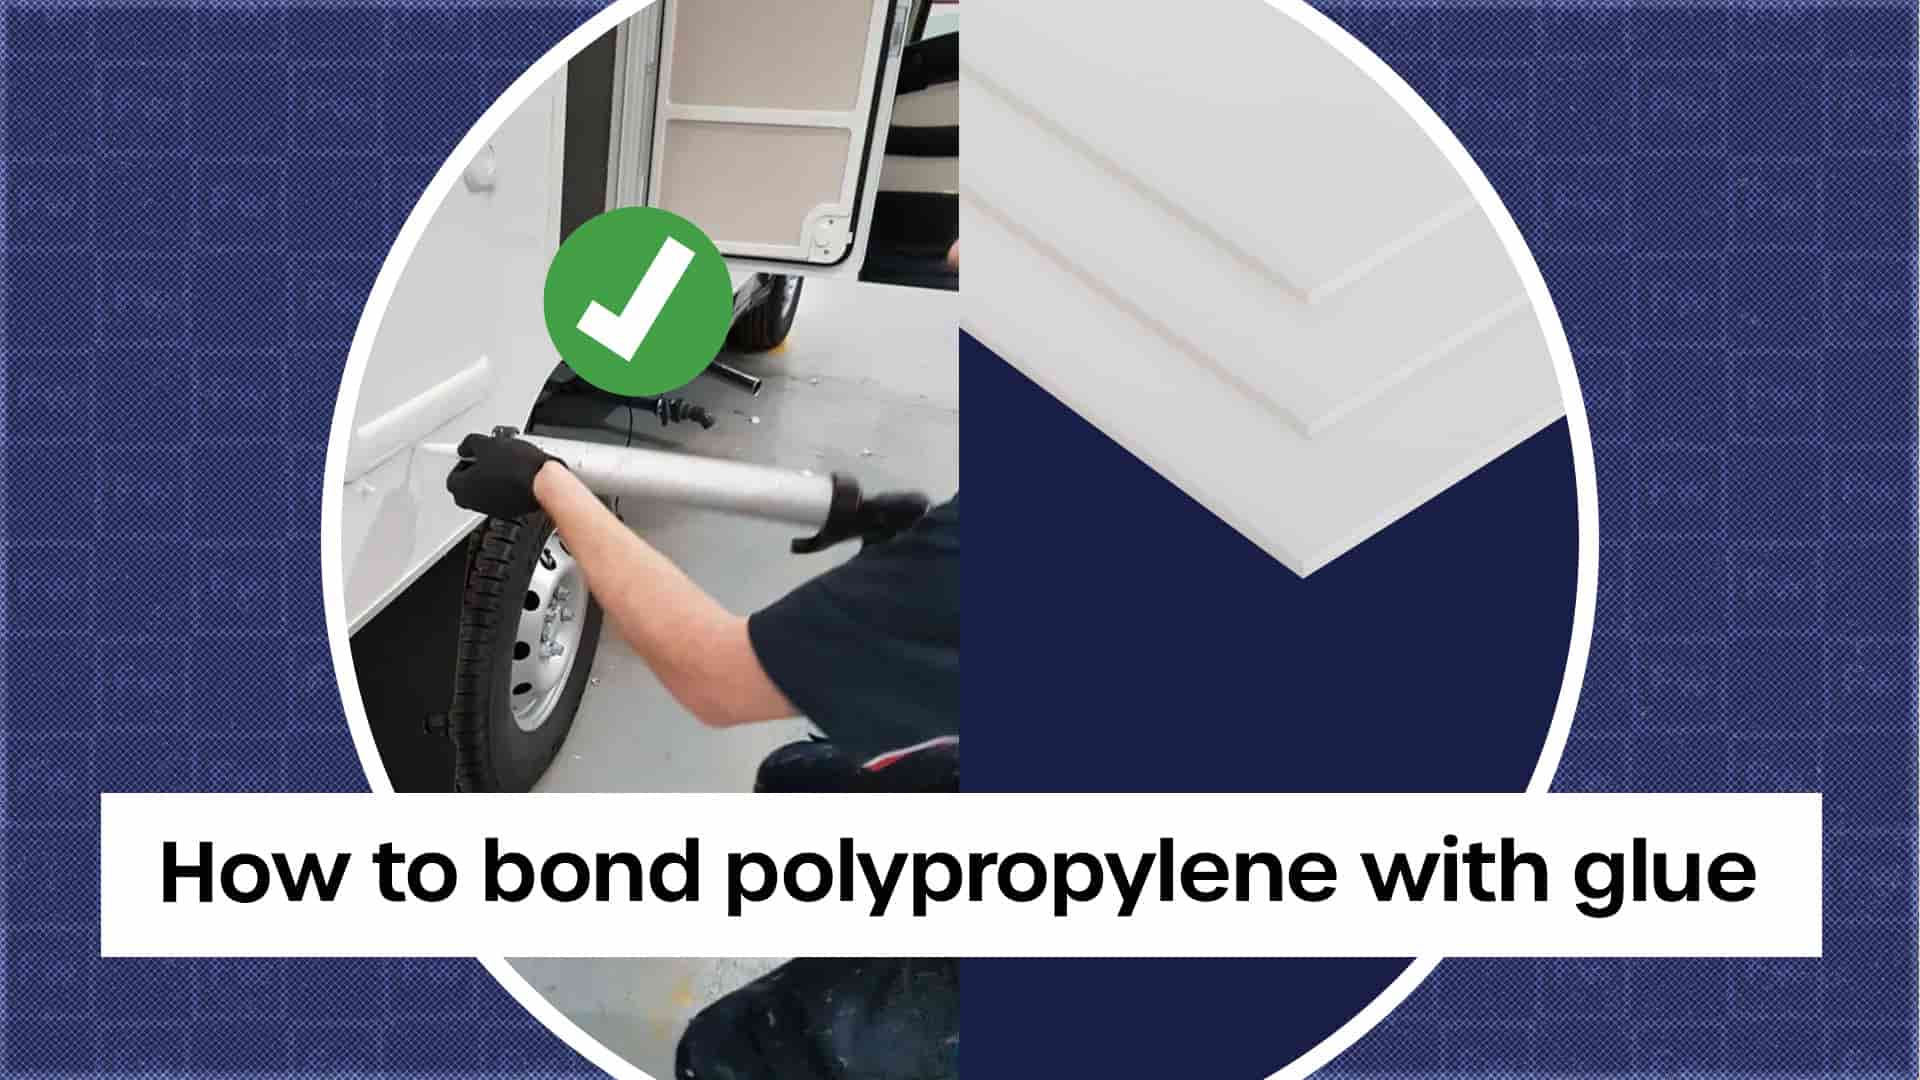 How to bond polypropylene with glue